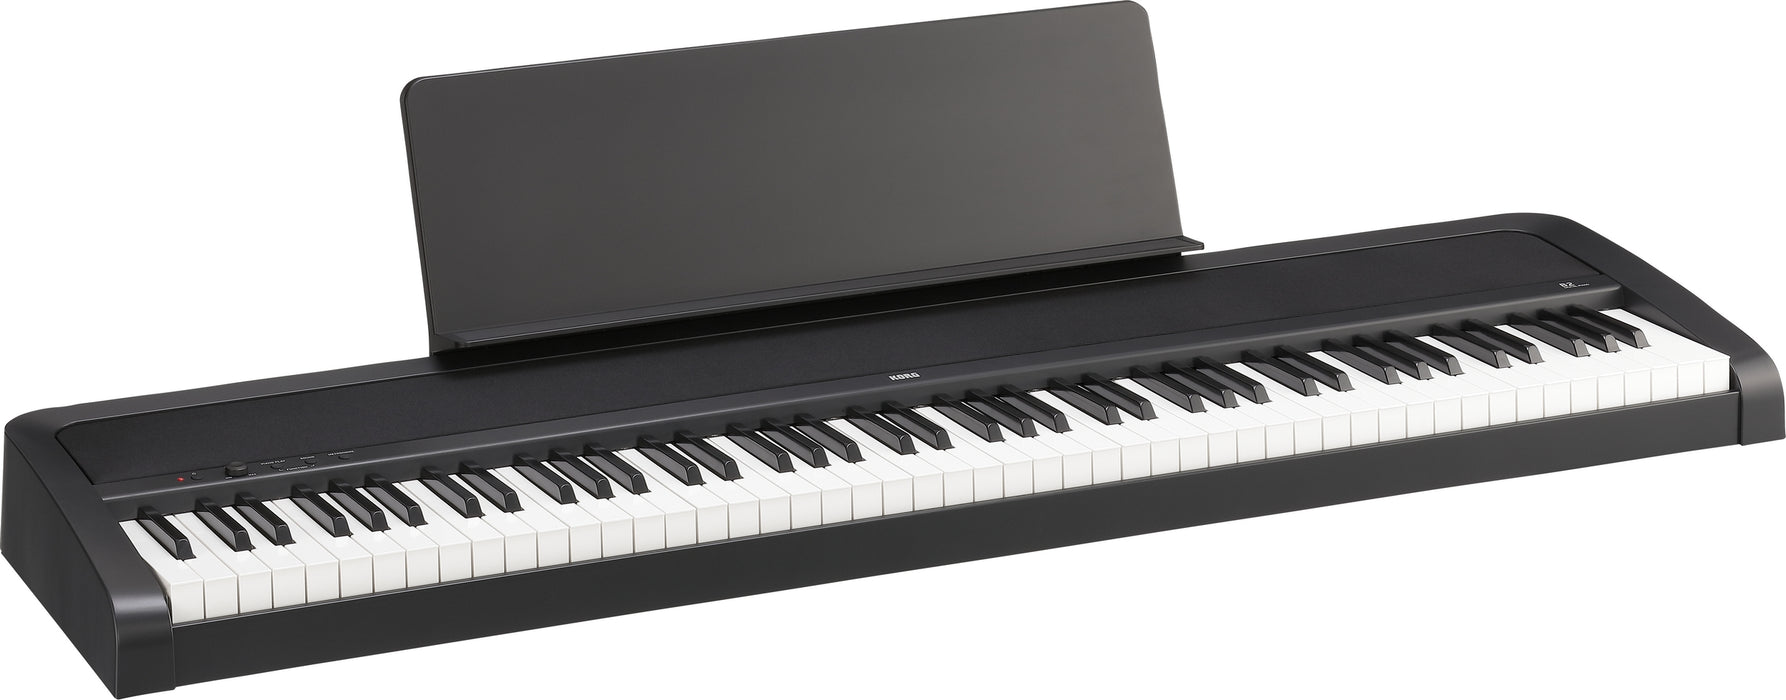 Korg B2 88-Key Digital Piano - Black - New,Black